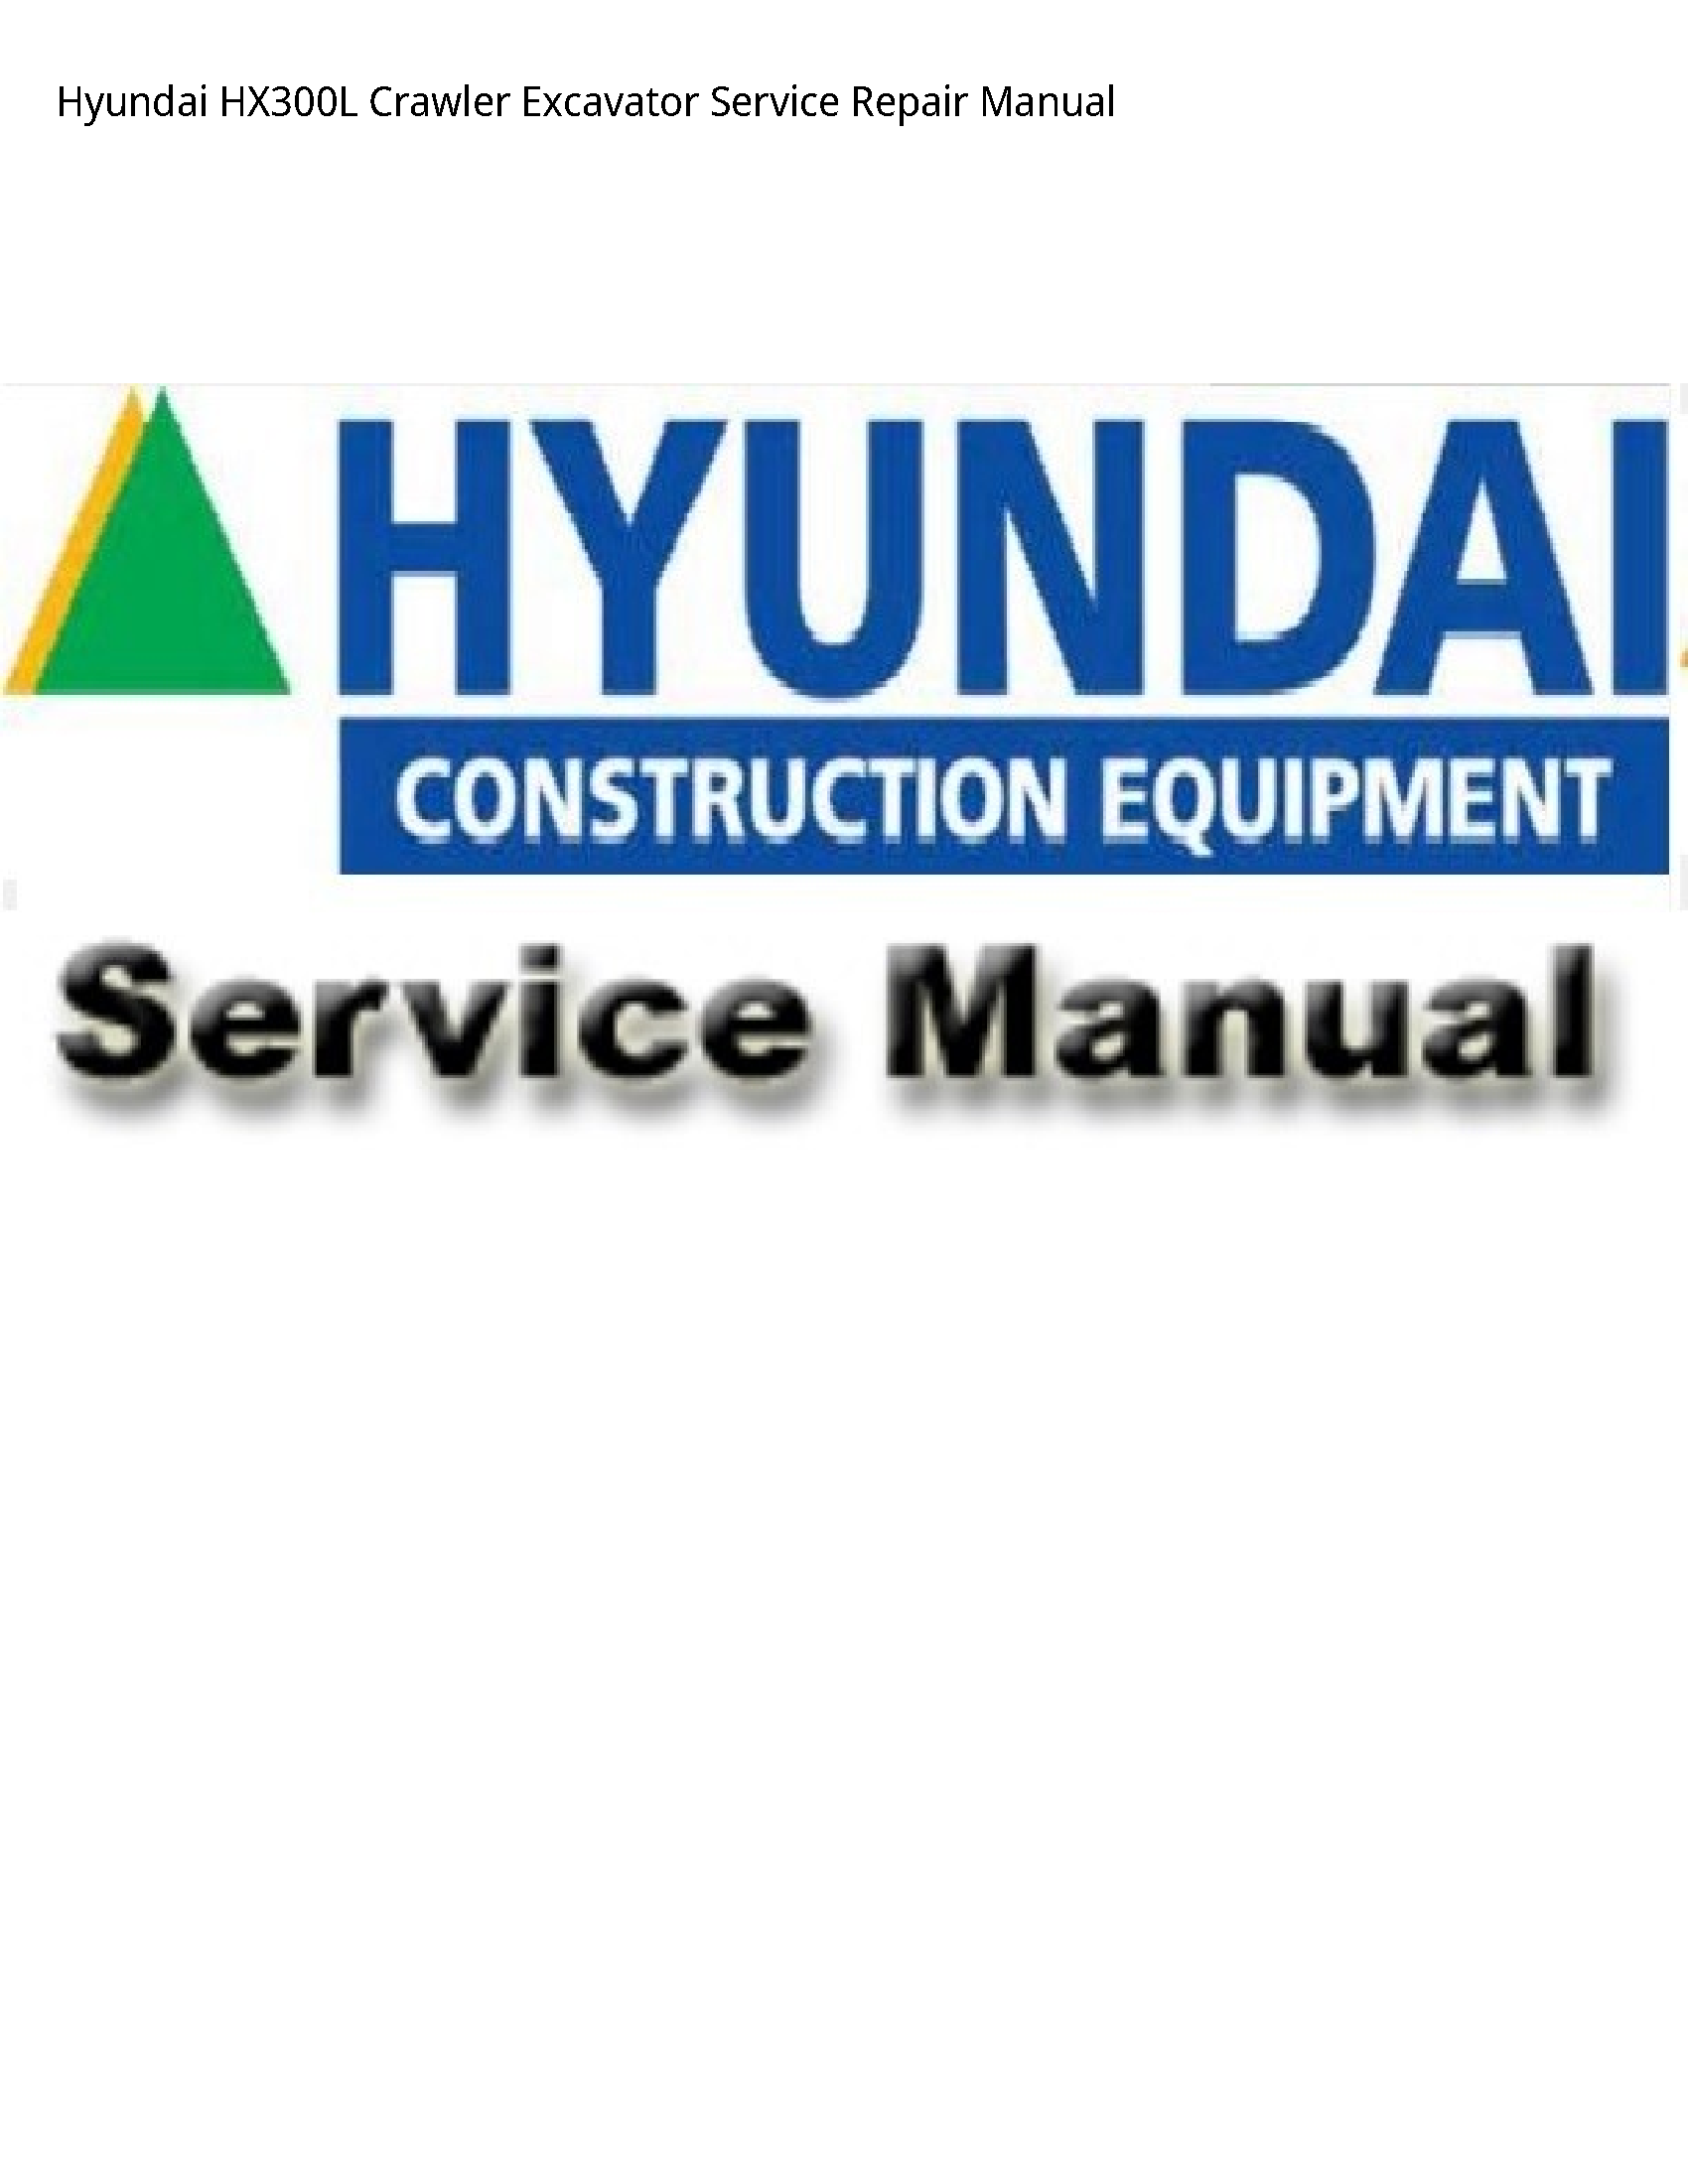 Hyundai HX300L Crawler Excavator manual